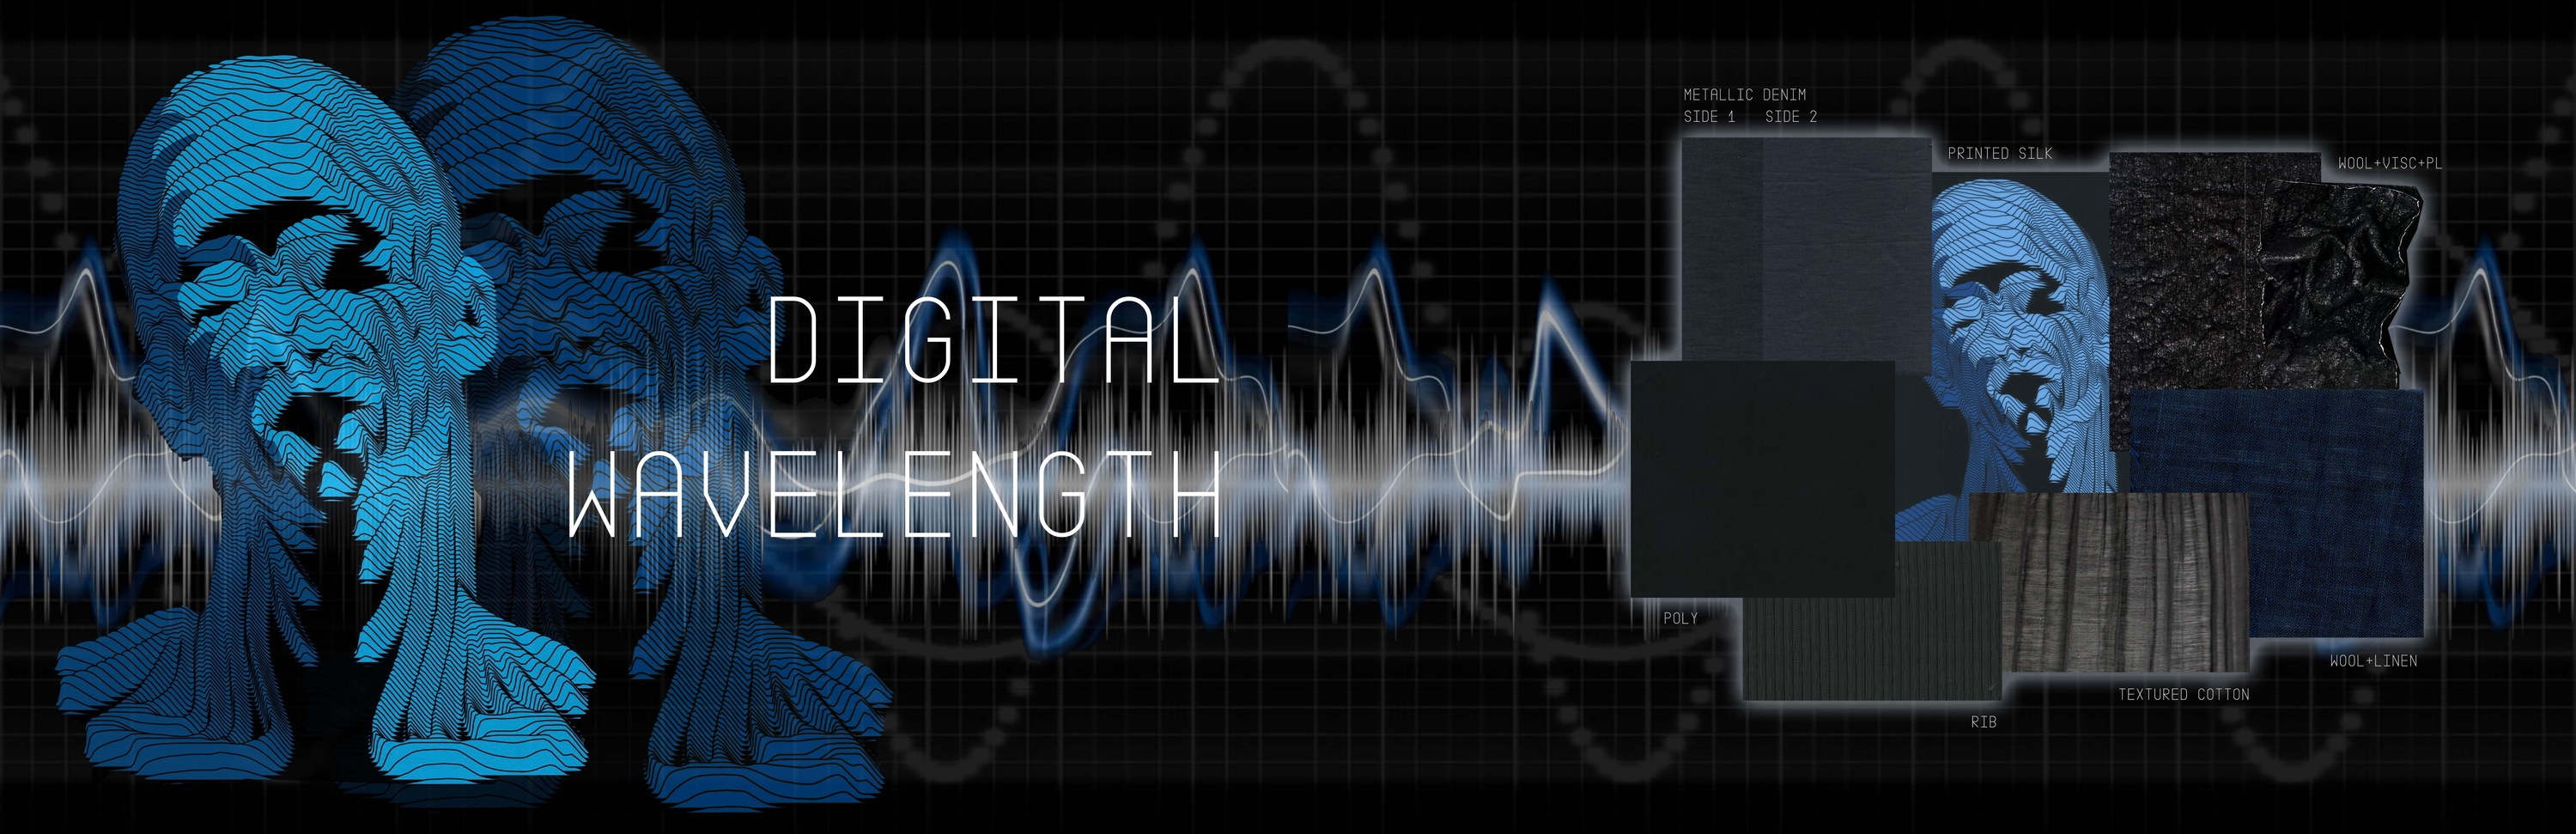 Digital Wavelength